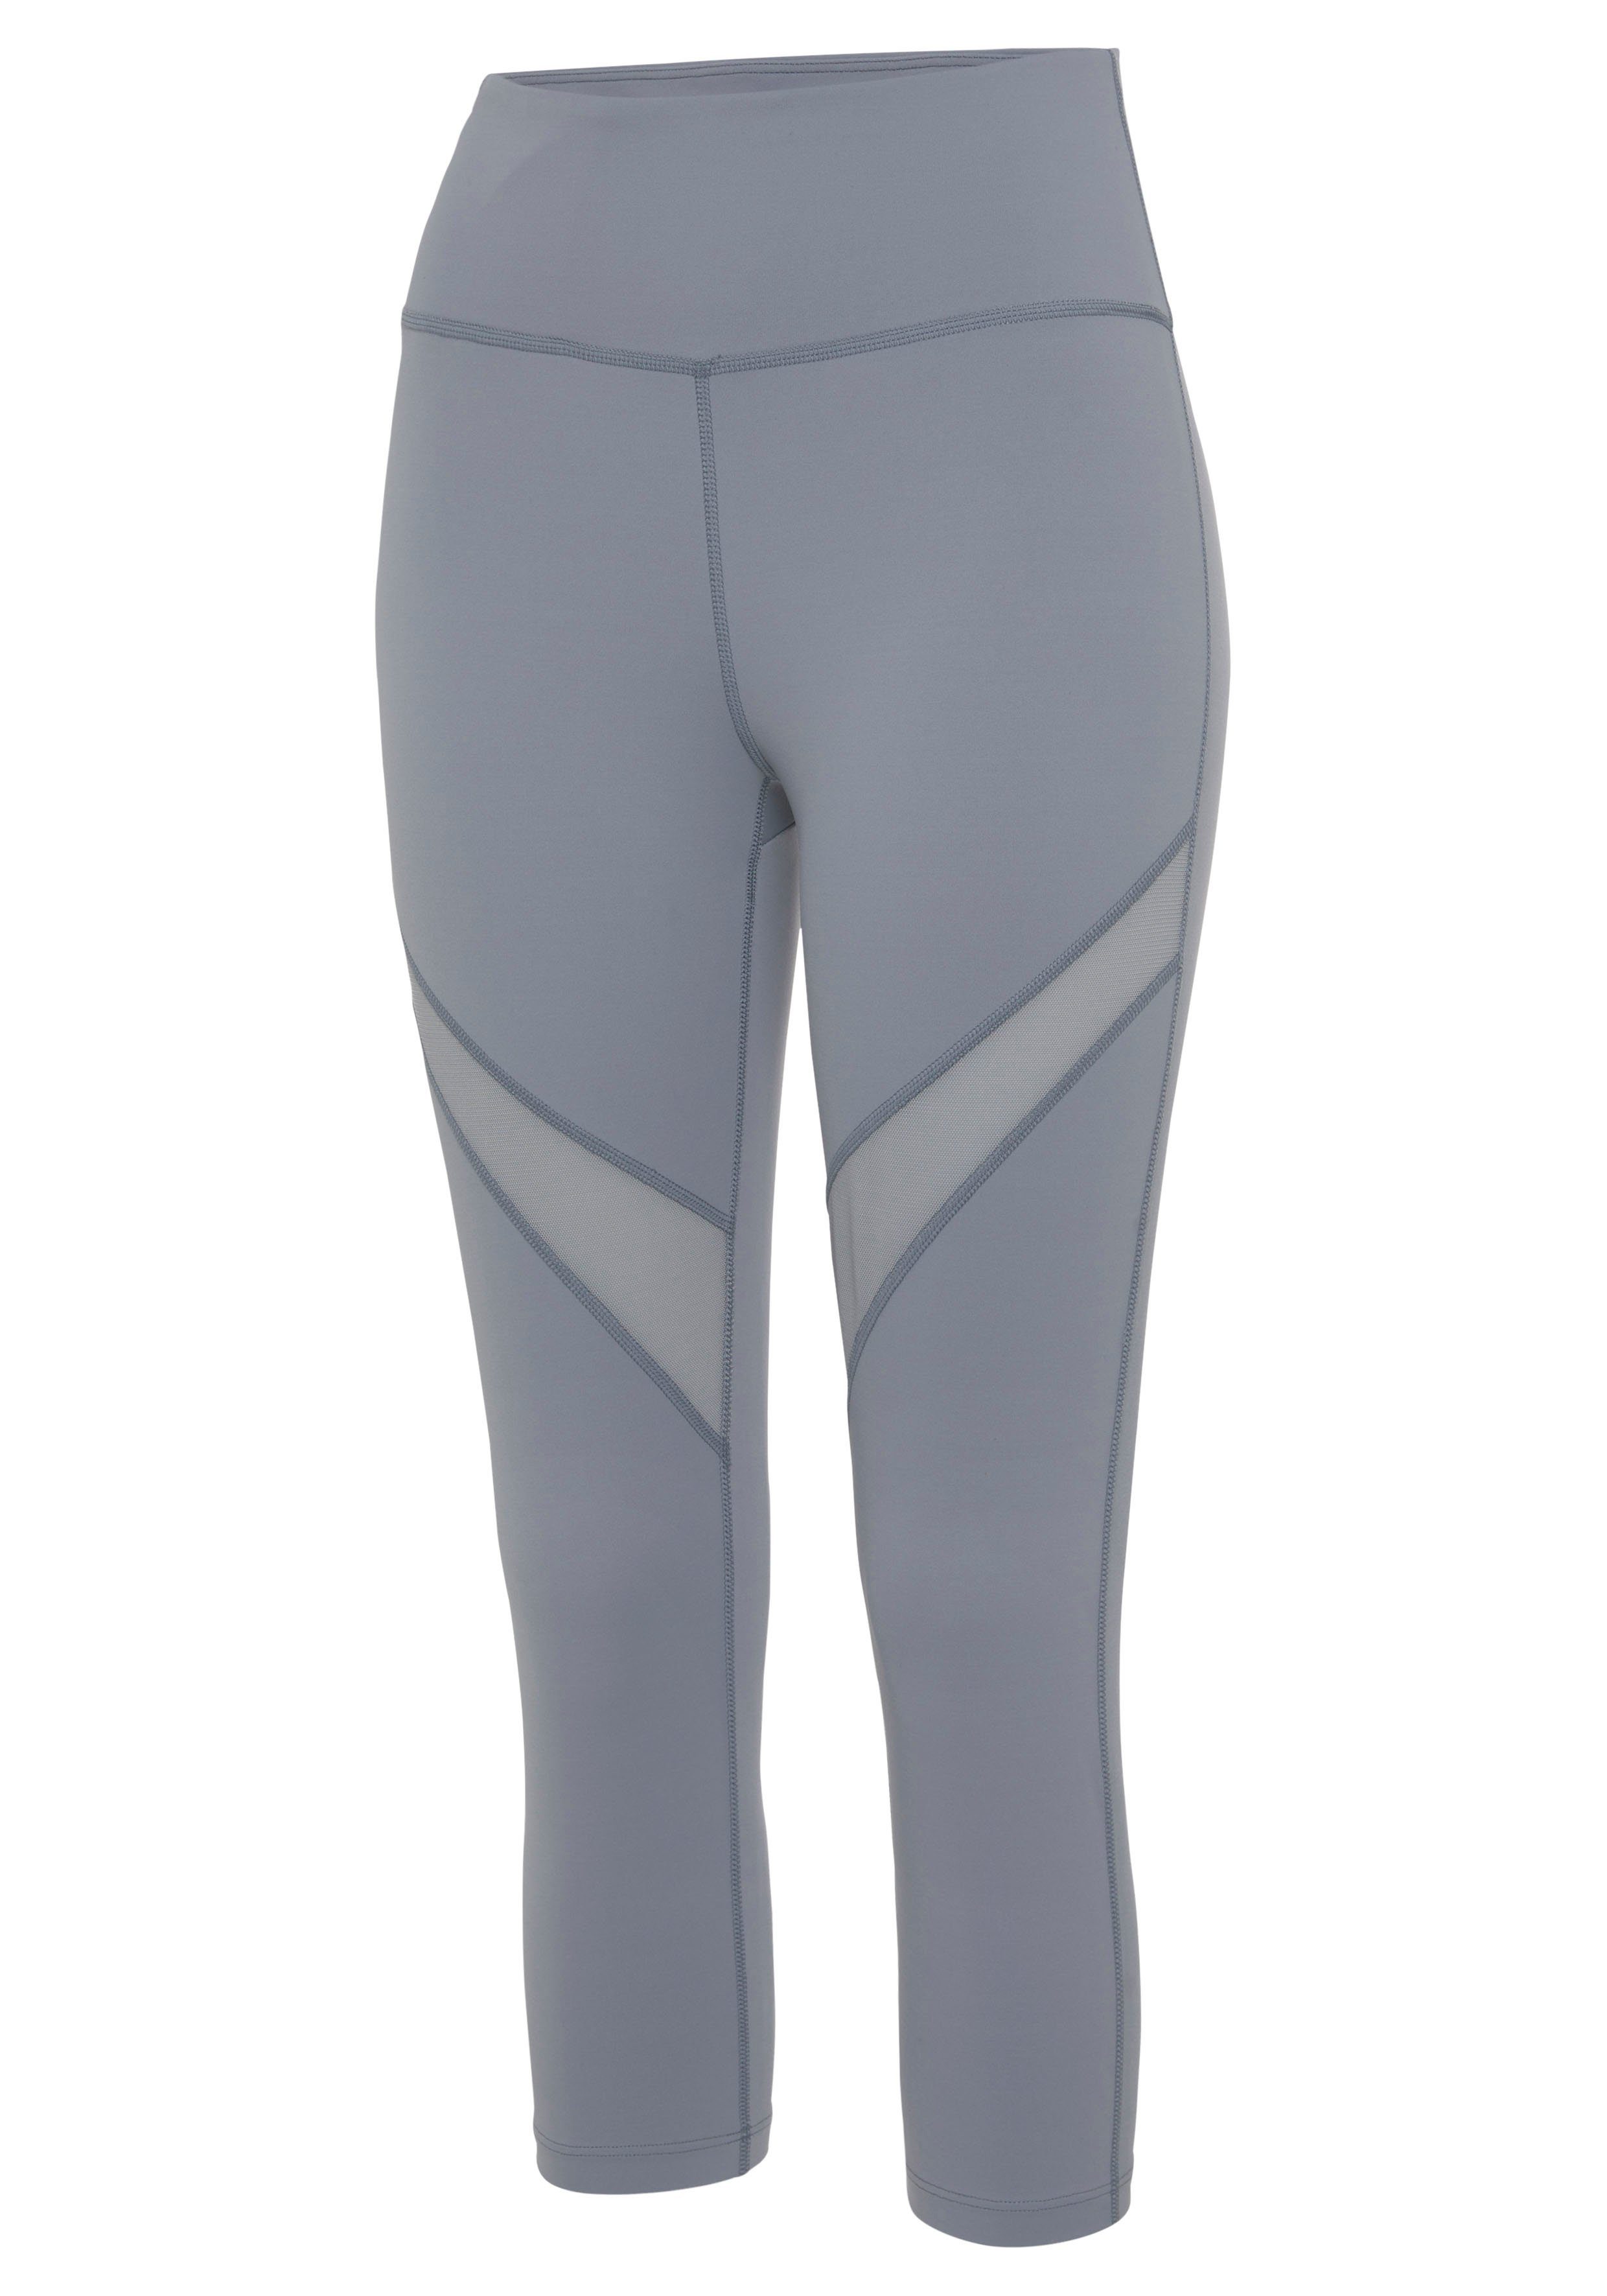 Caprileggings -Sport LASCANA Loungewear grau mit kleiner ACTIVE Raffung, Capri blau